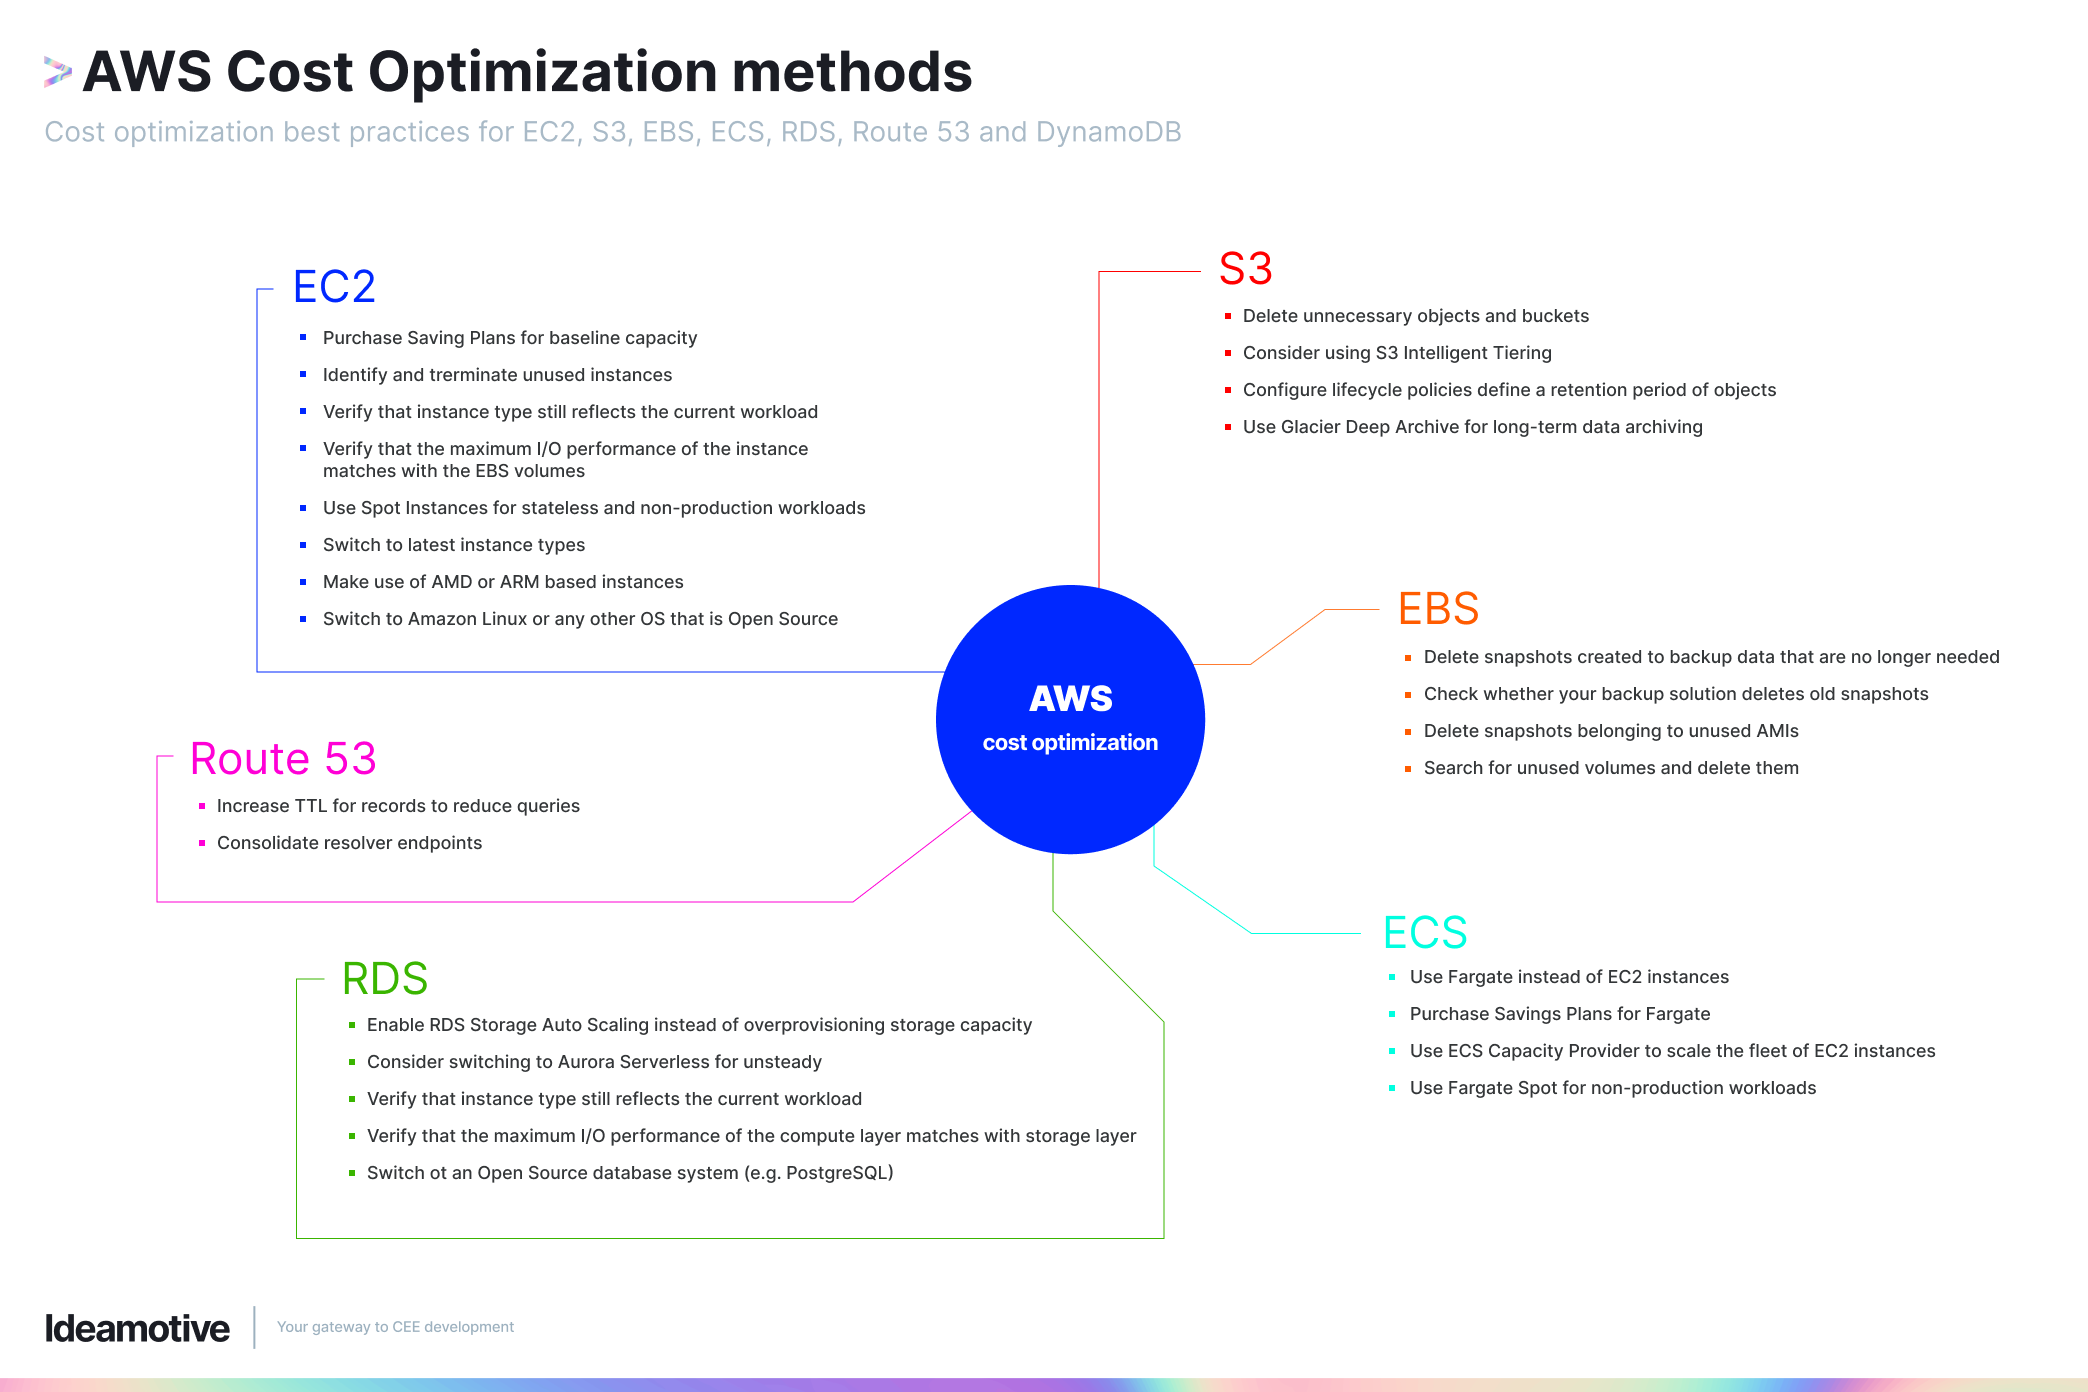 AWS Cost Optimization methods part 1